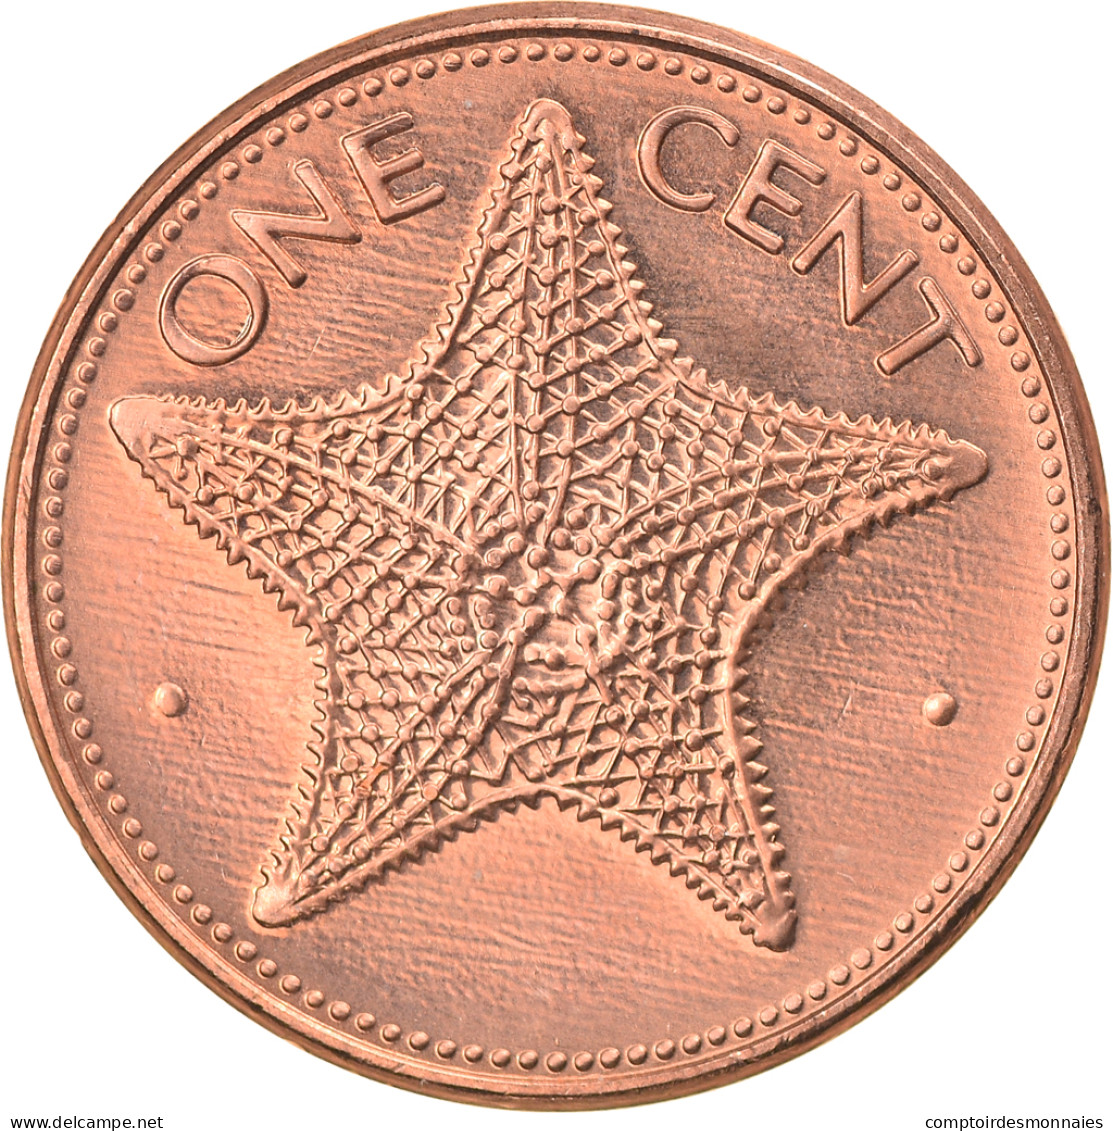 Monnaie, Bahamas, Elizabeth II, Cent, 2004, SUP, Copper Plated Zinc, KM:59a - Bahamas